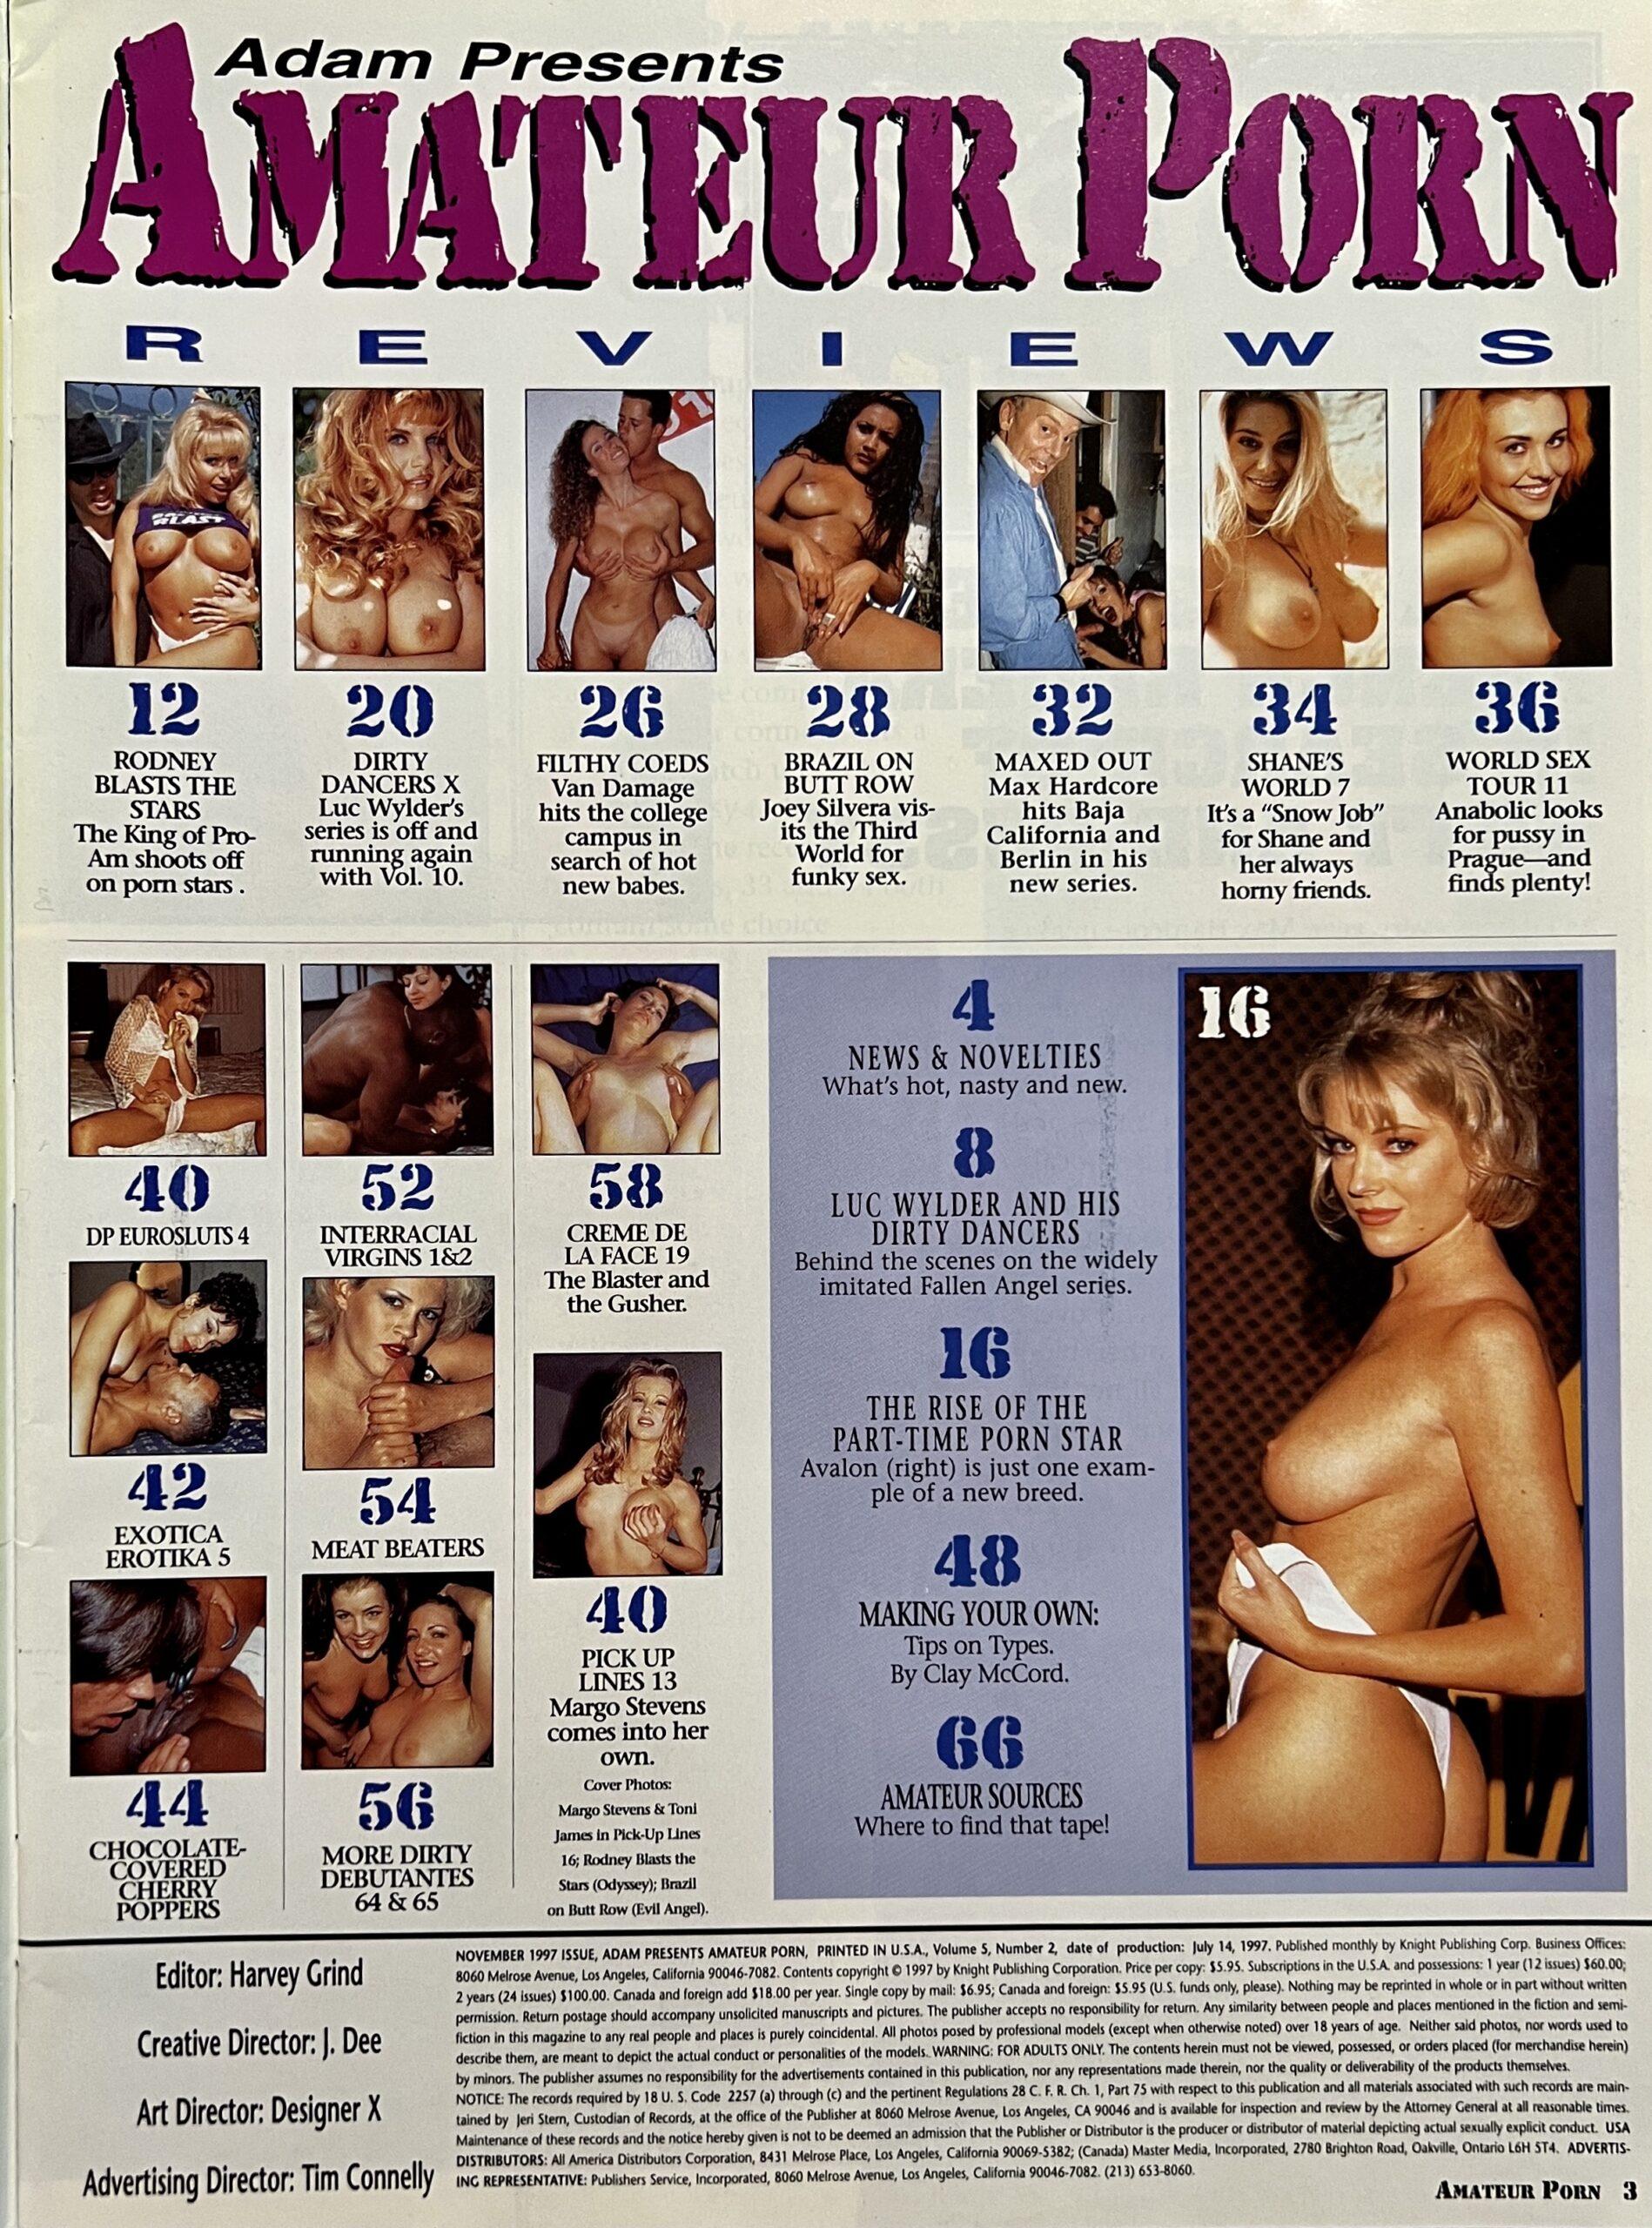 Adam Presents Amateur Porn July 1997 -MISSING Pullout Poster- Vintage Magazines 16 pic